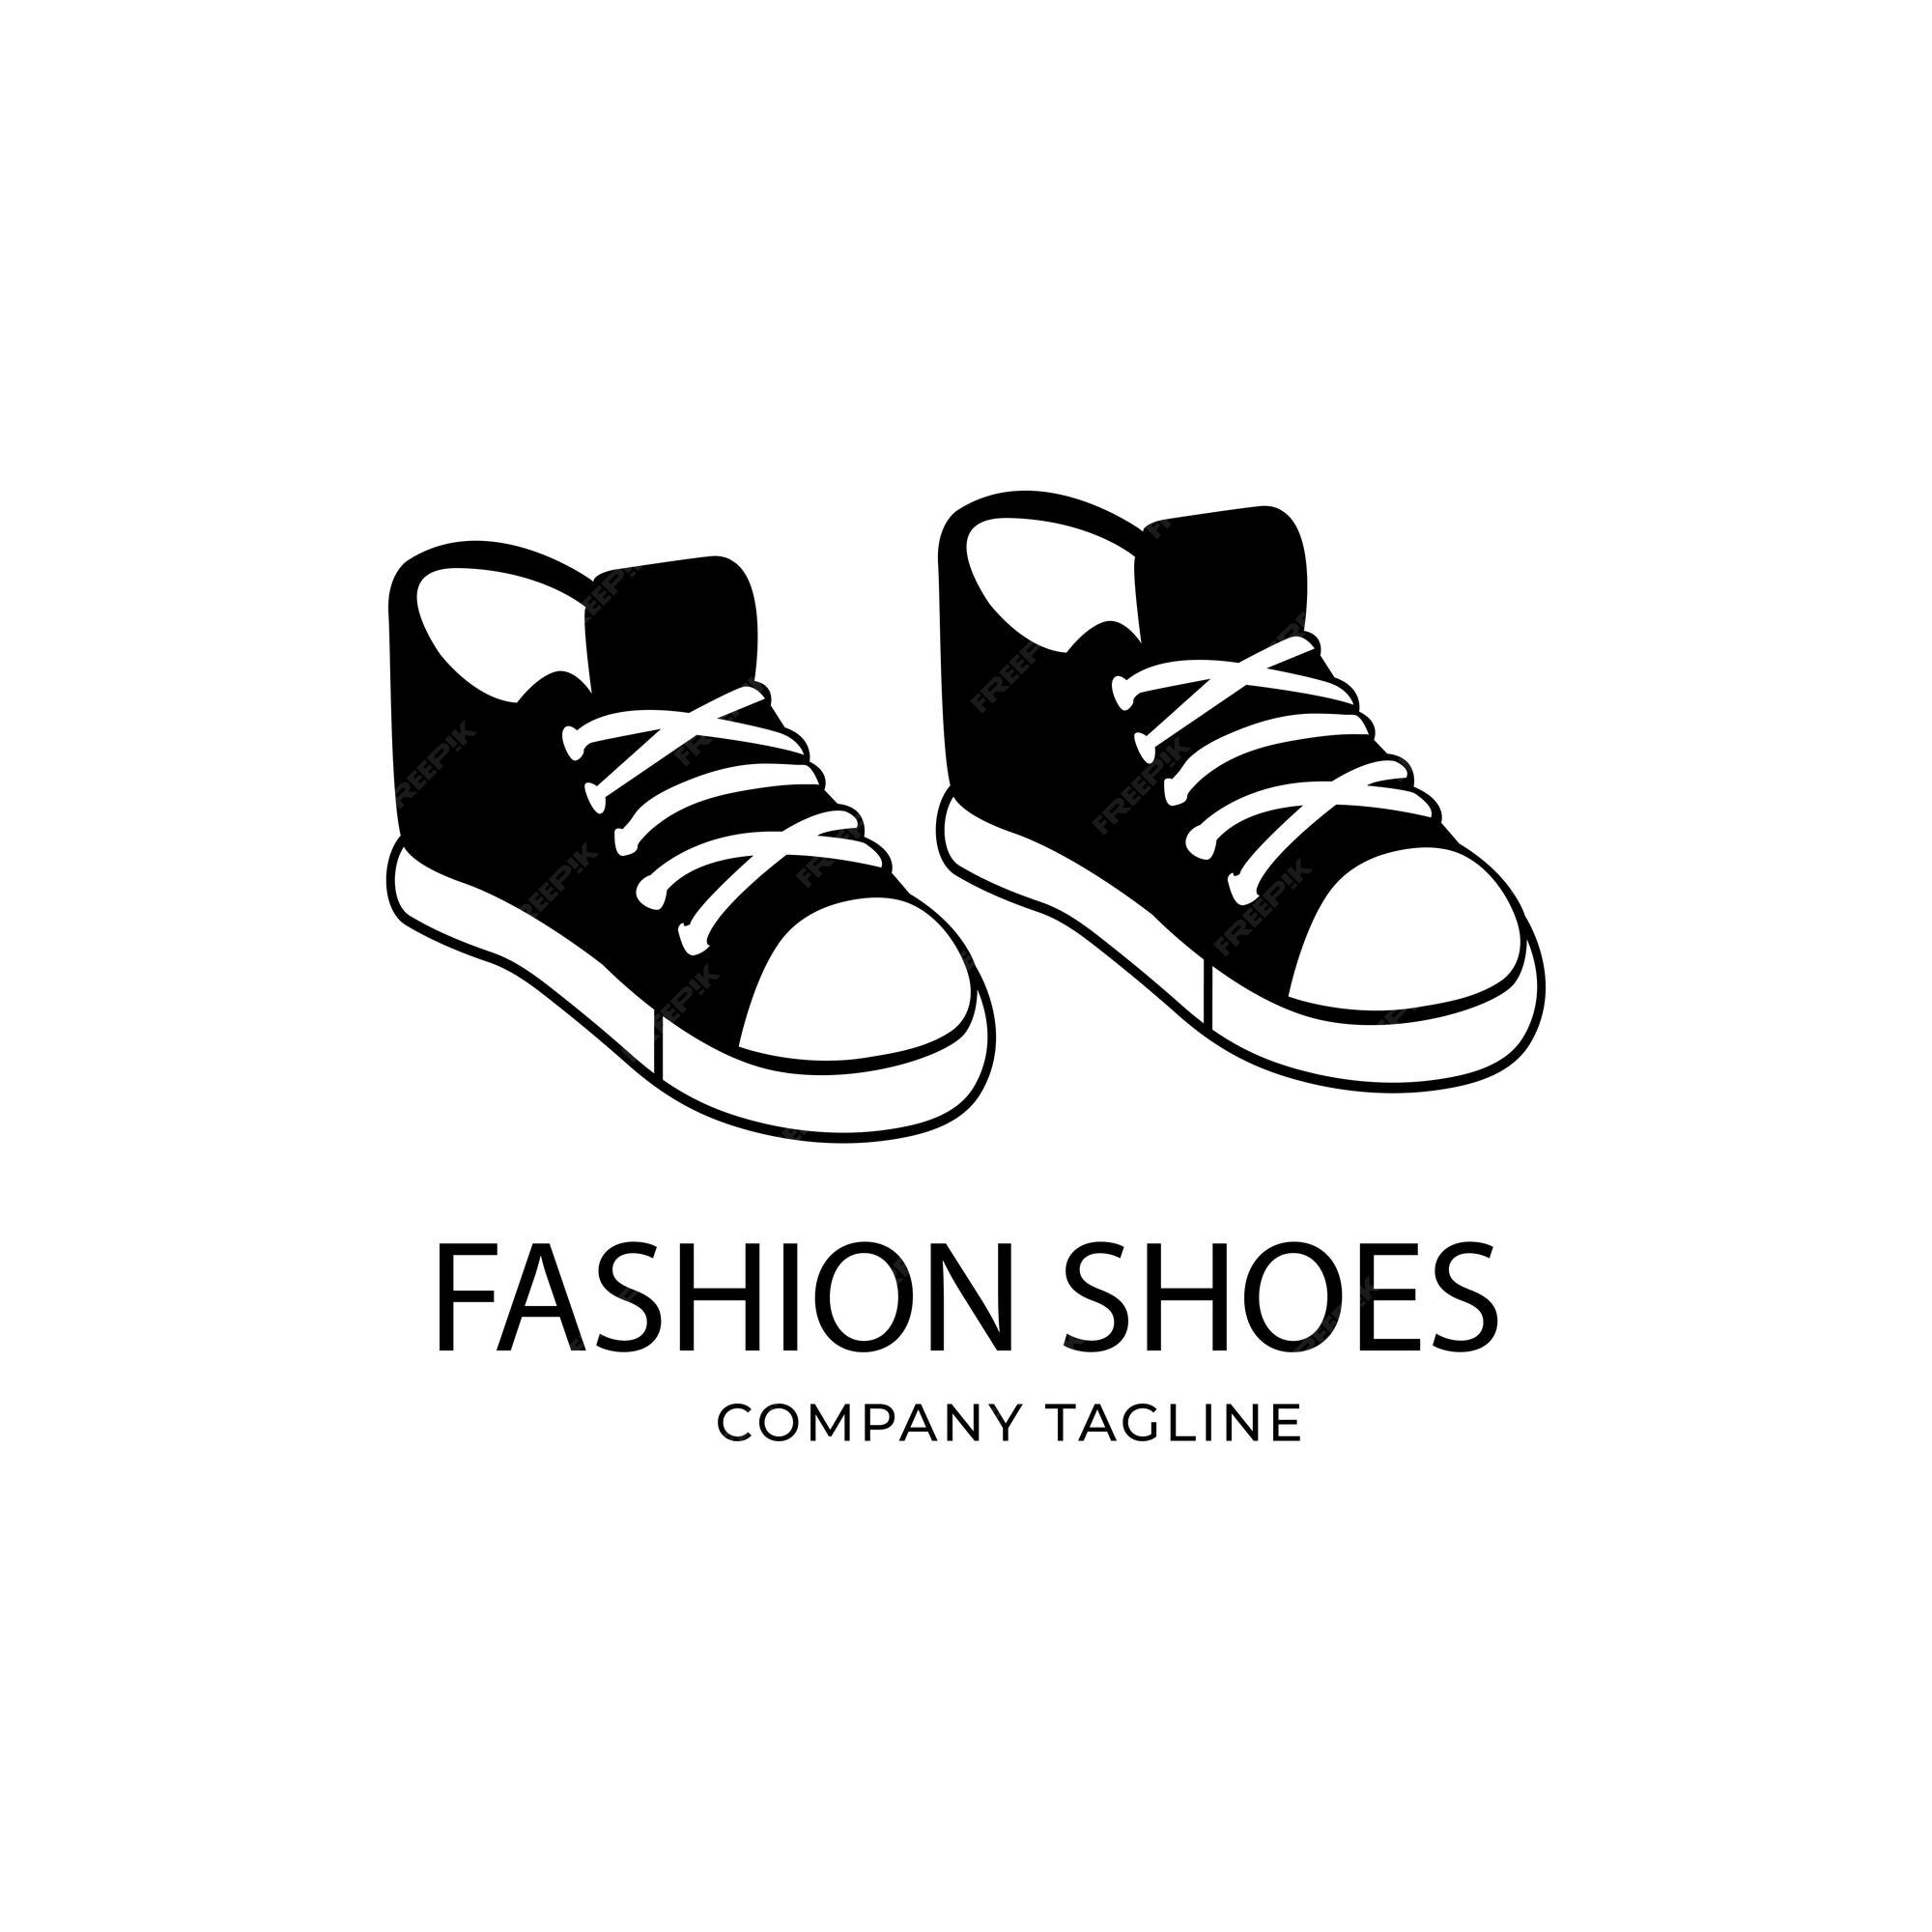 Premium Vector | Shoes logo design vector illustration